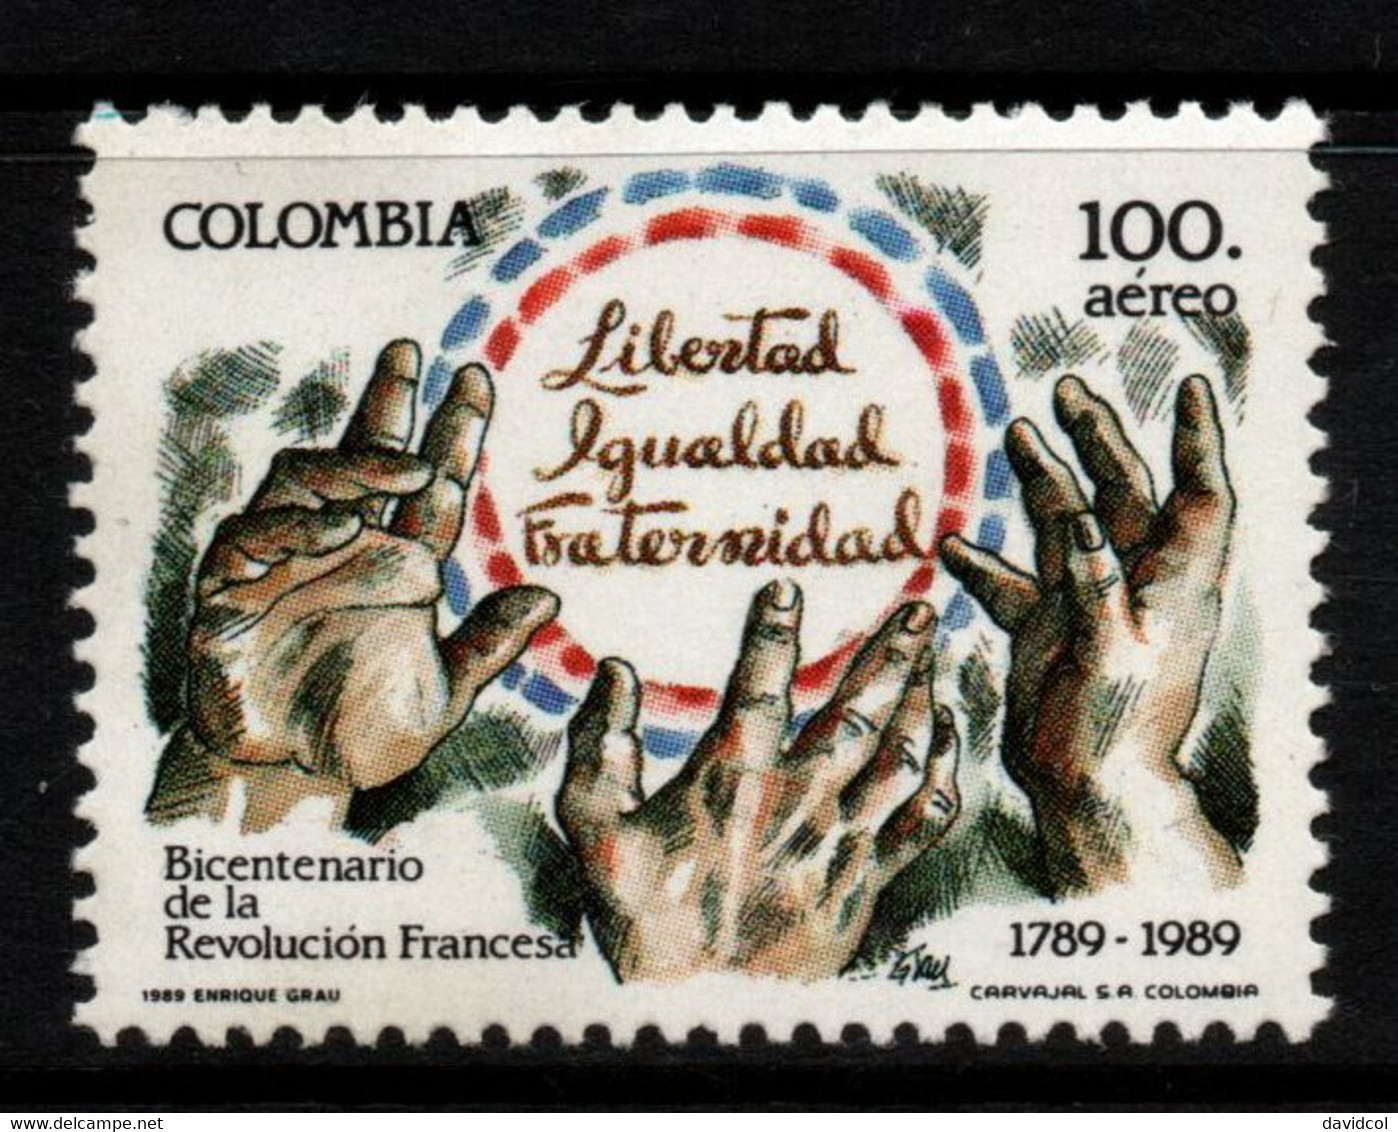 05- KOLUMBIEN - 1989 - MI#:1752 - MNH- BICENTENARY OF THE FRENCH REVOLUTION  1789-1989 - Kolumbien